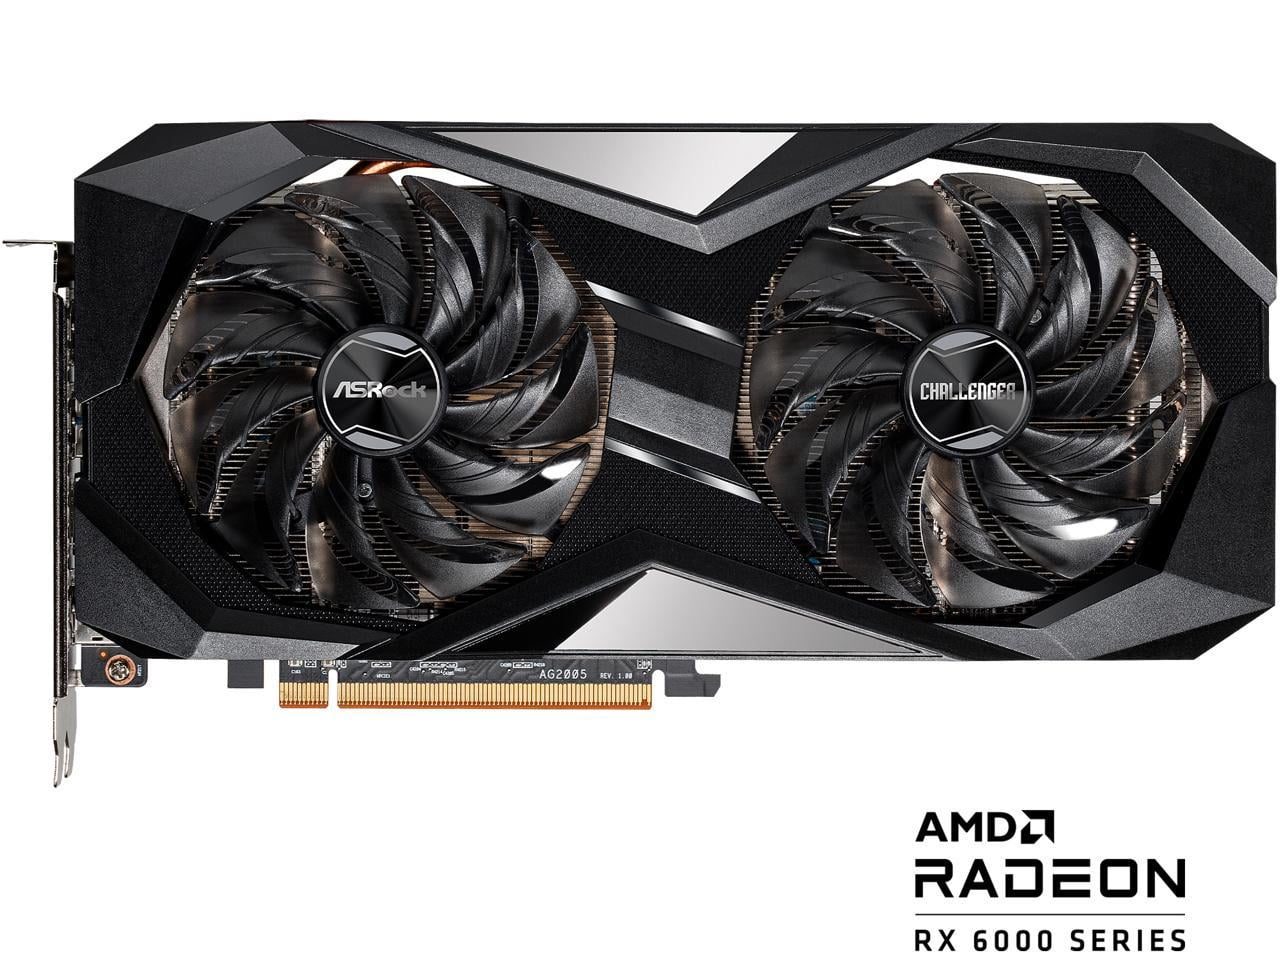 AMD reveals new Radeon 6700 XT graphics chip - Video - CNET